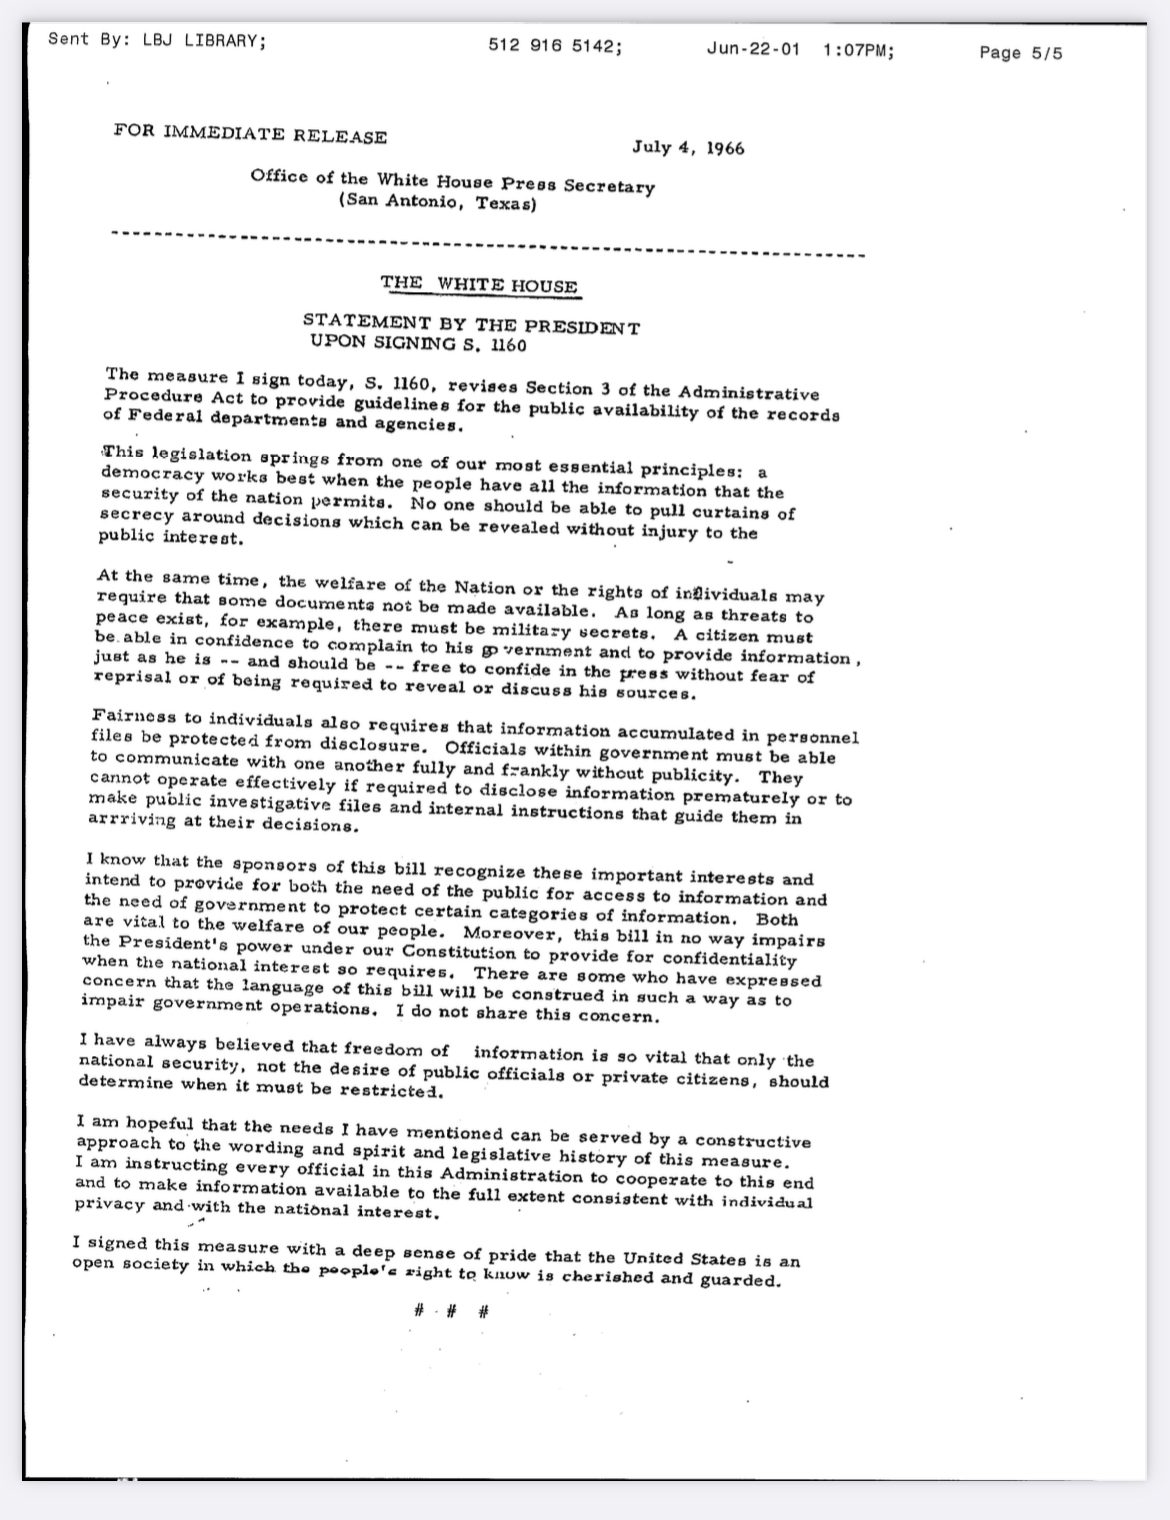 1966 press release on FOIA